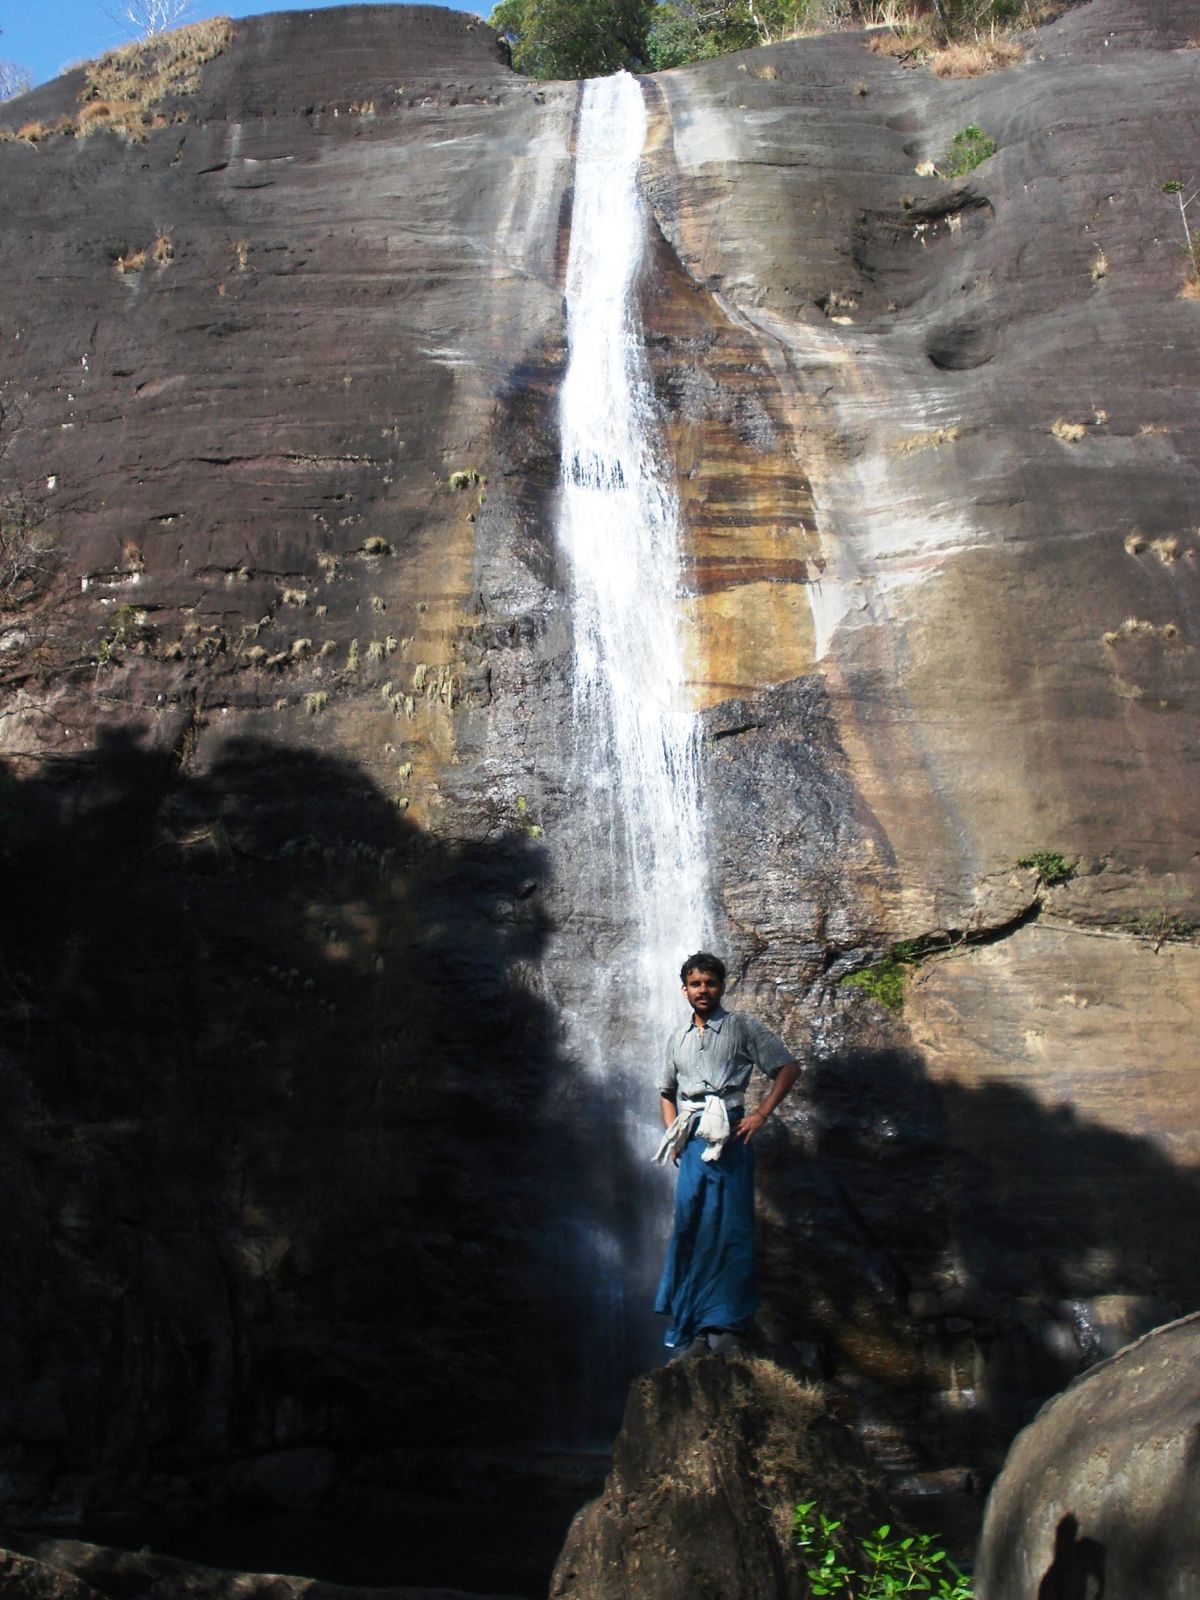 a man standing on the rocks below a waterfall